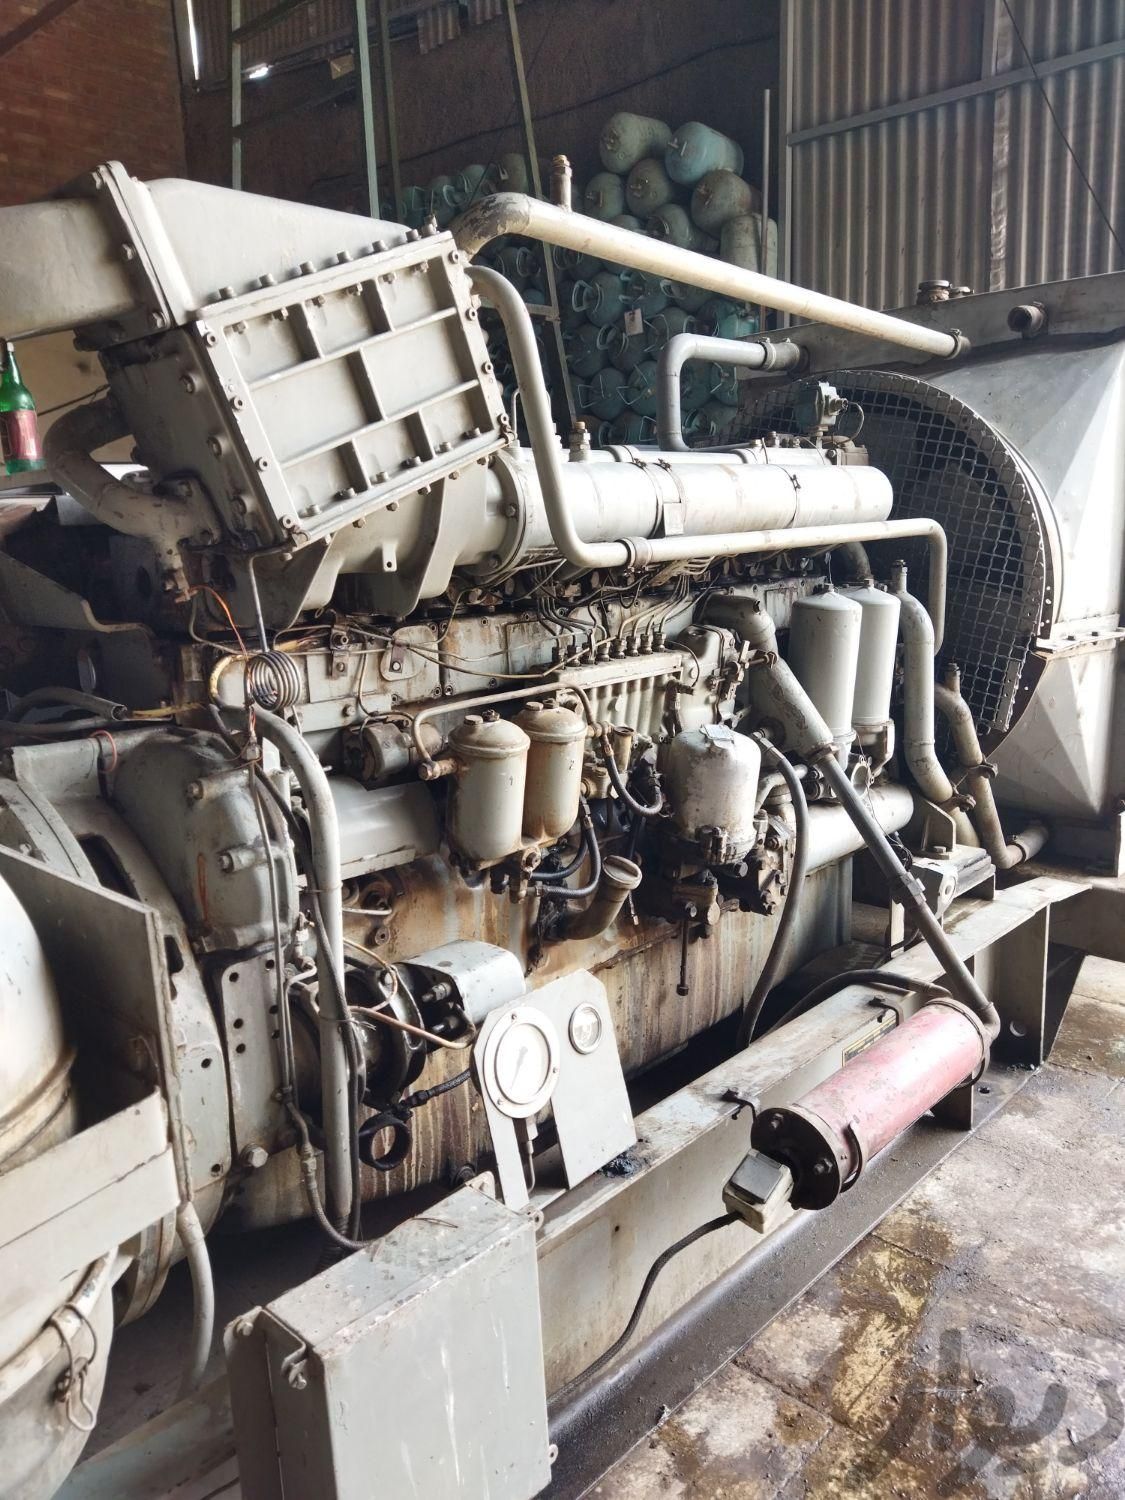 موتور ژنراتور دویتس المان ۸سیلندر دیزل ژنراتور|ماشین‌آلات صنعتی|تهران, شیوا|دیوار